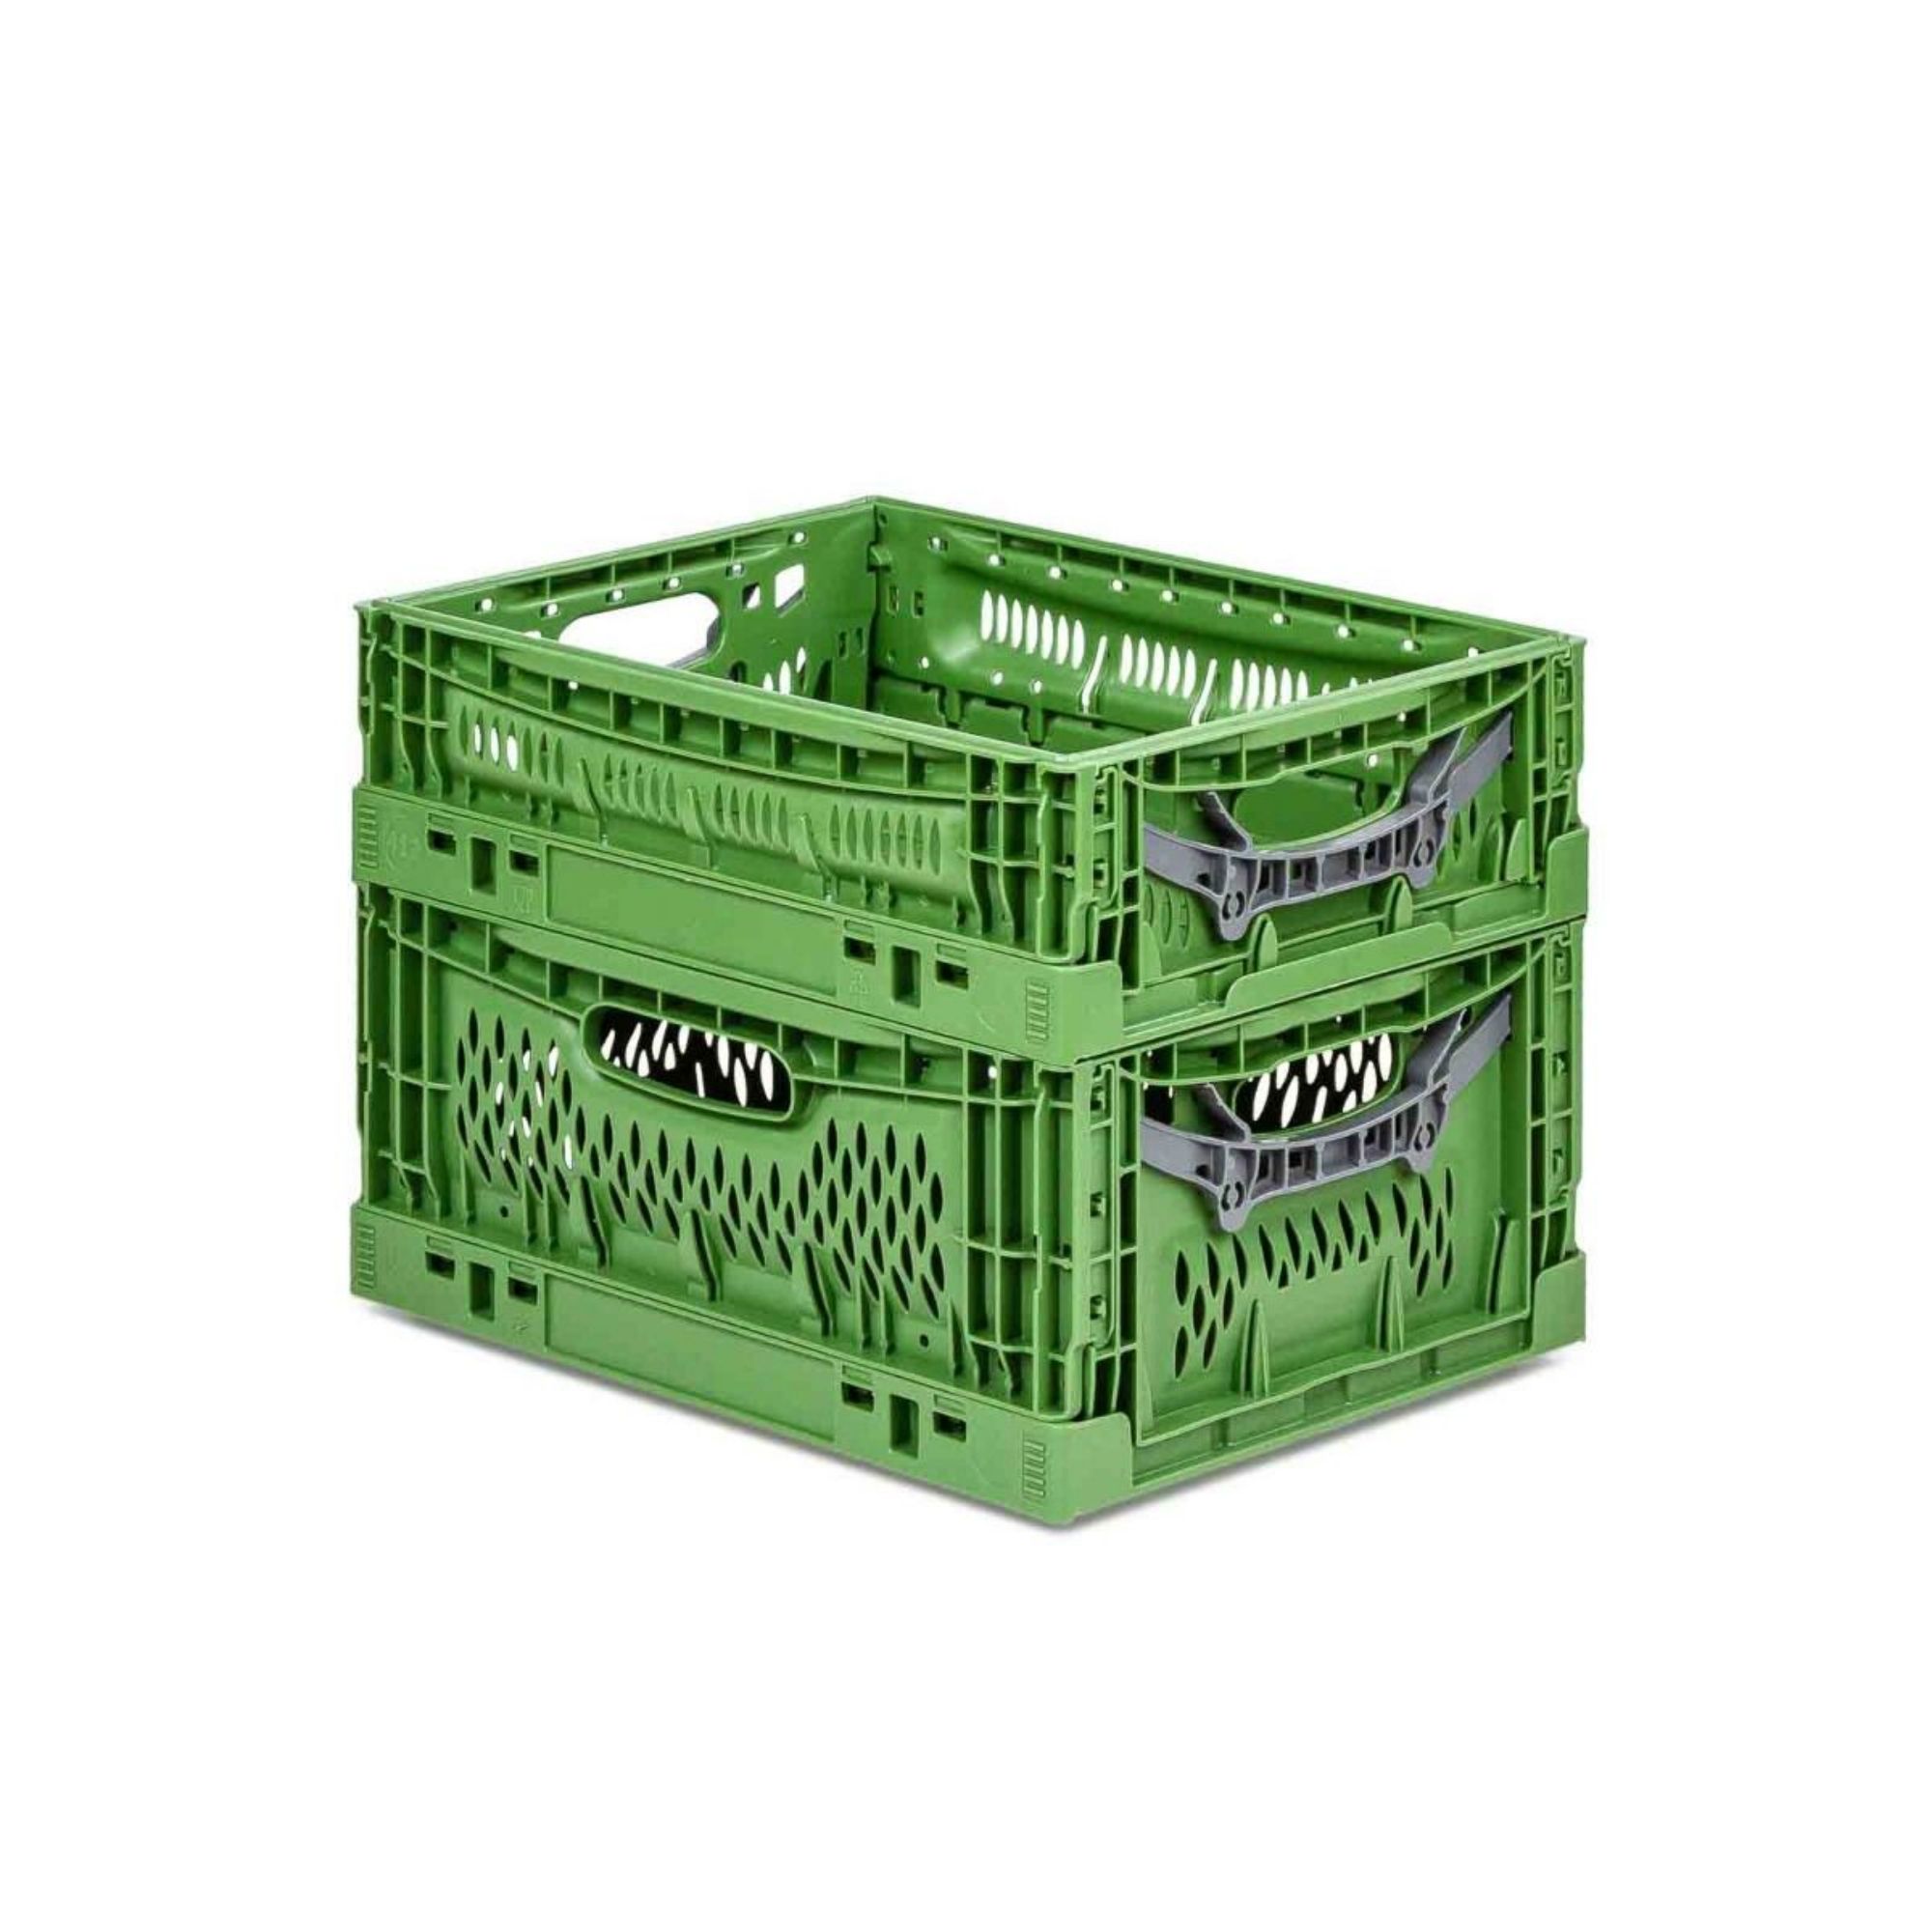 Stabile Profi-Klappbox Chameleon in Industriequalität | HxBxT 18x40x60cm | 35 Liter | klappbar stapelbar durchbrochen lebensmittelecht | Eurobox Eurobehälter Transportbehälter Stapelbehlter Faltbox